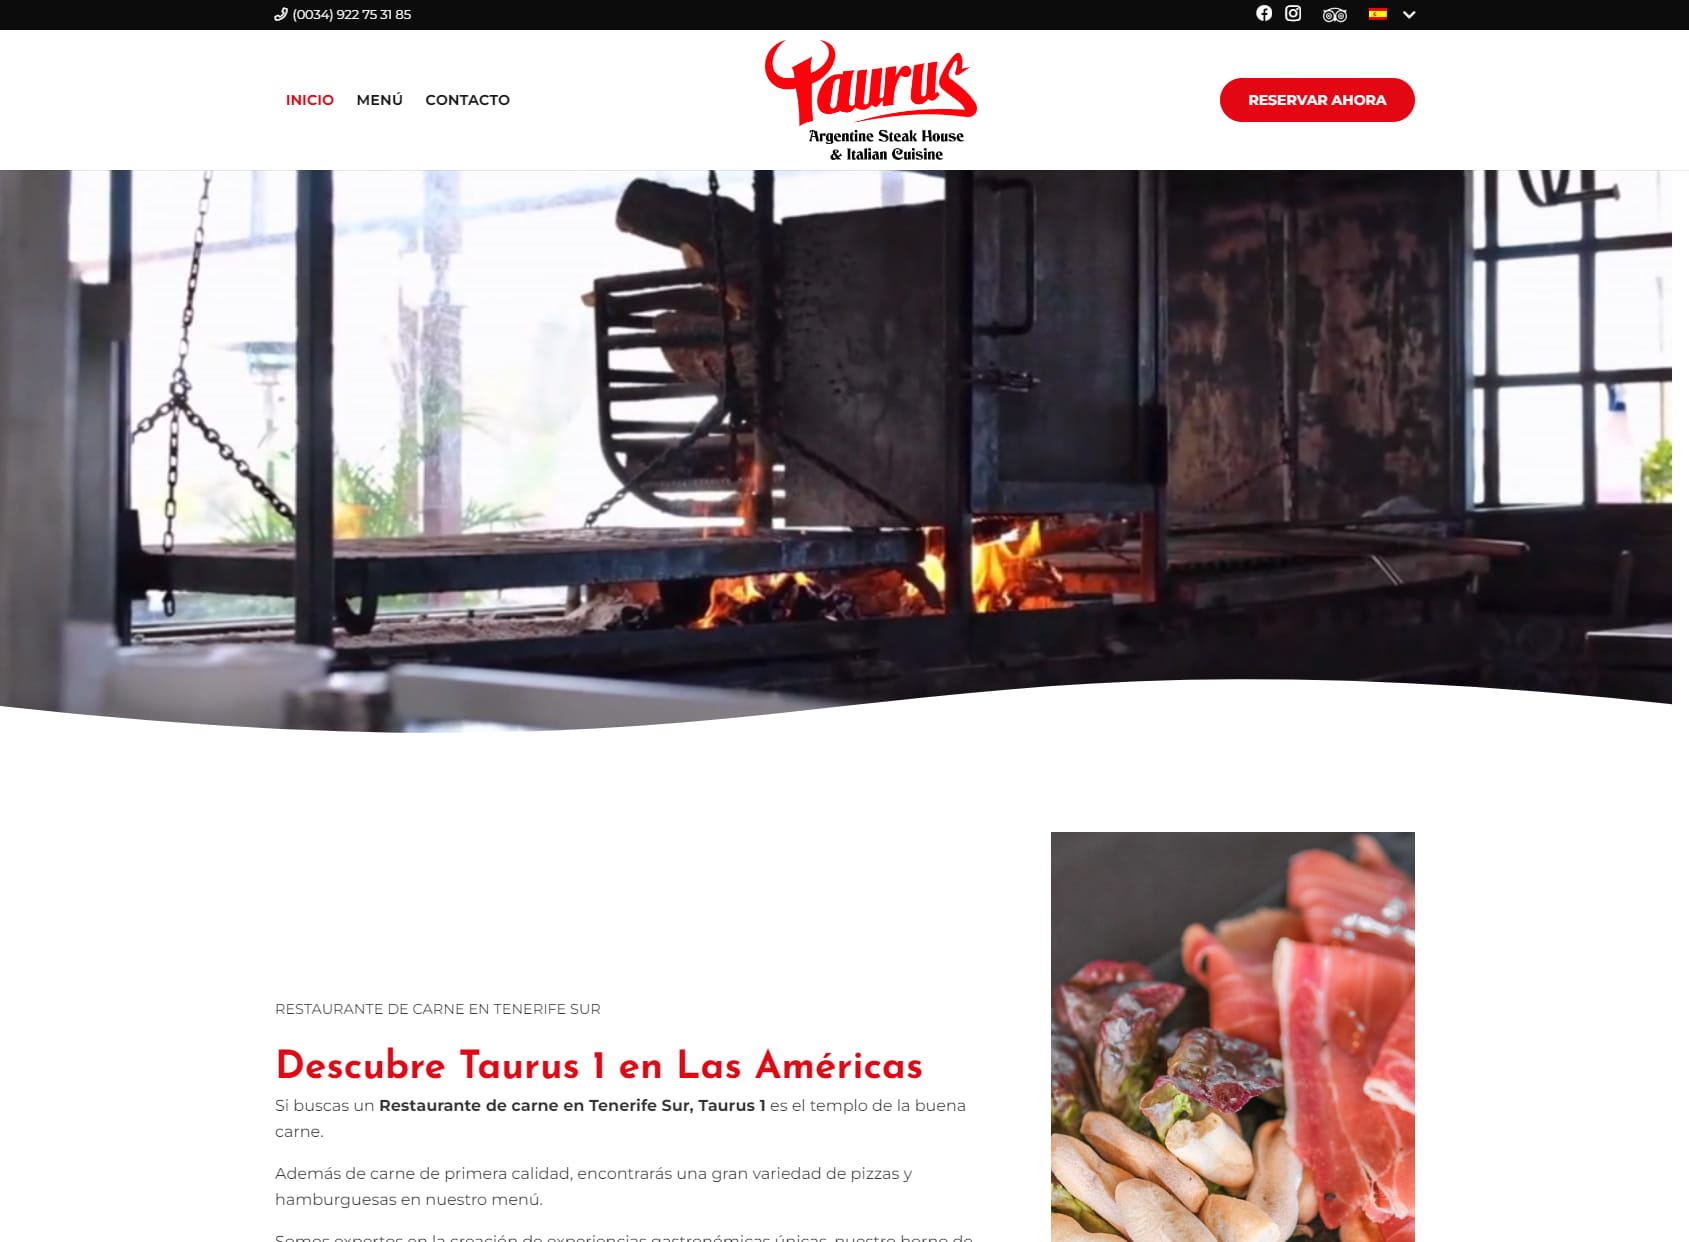 Taurus Argentine Steak House & Italian Cuisine